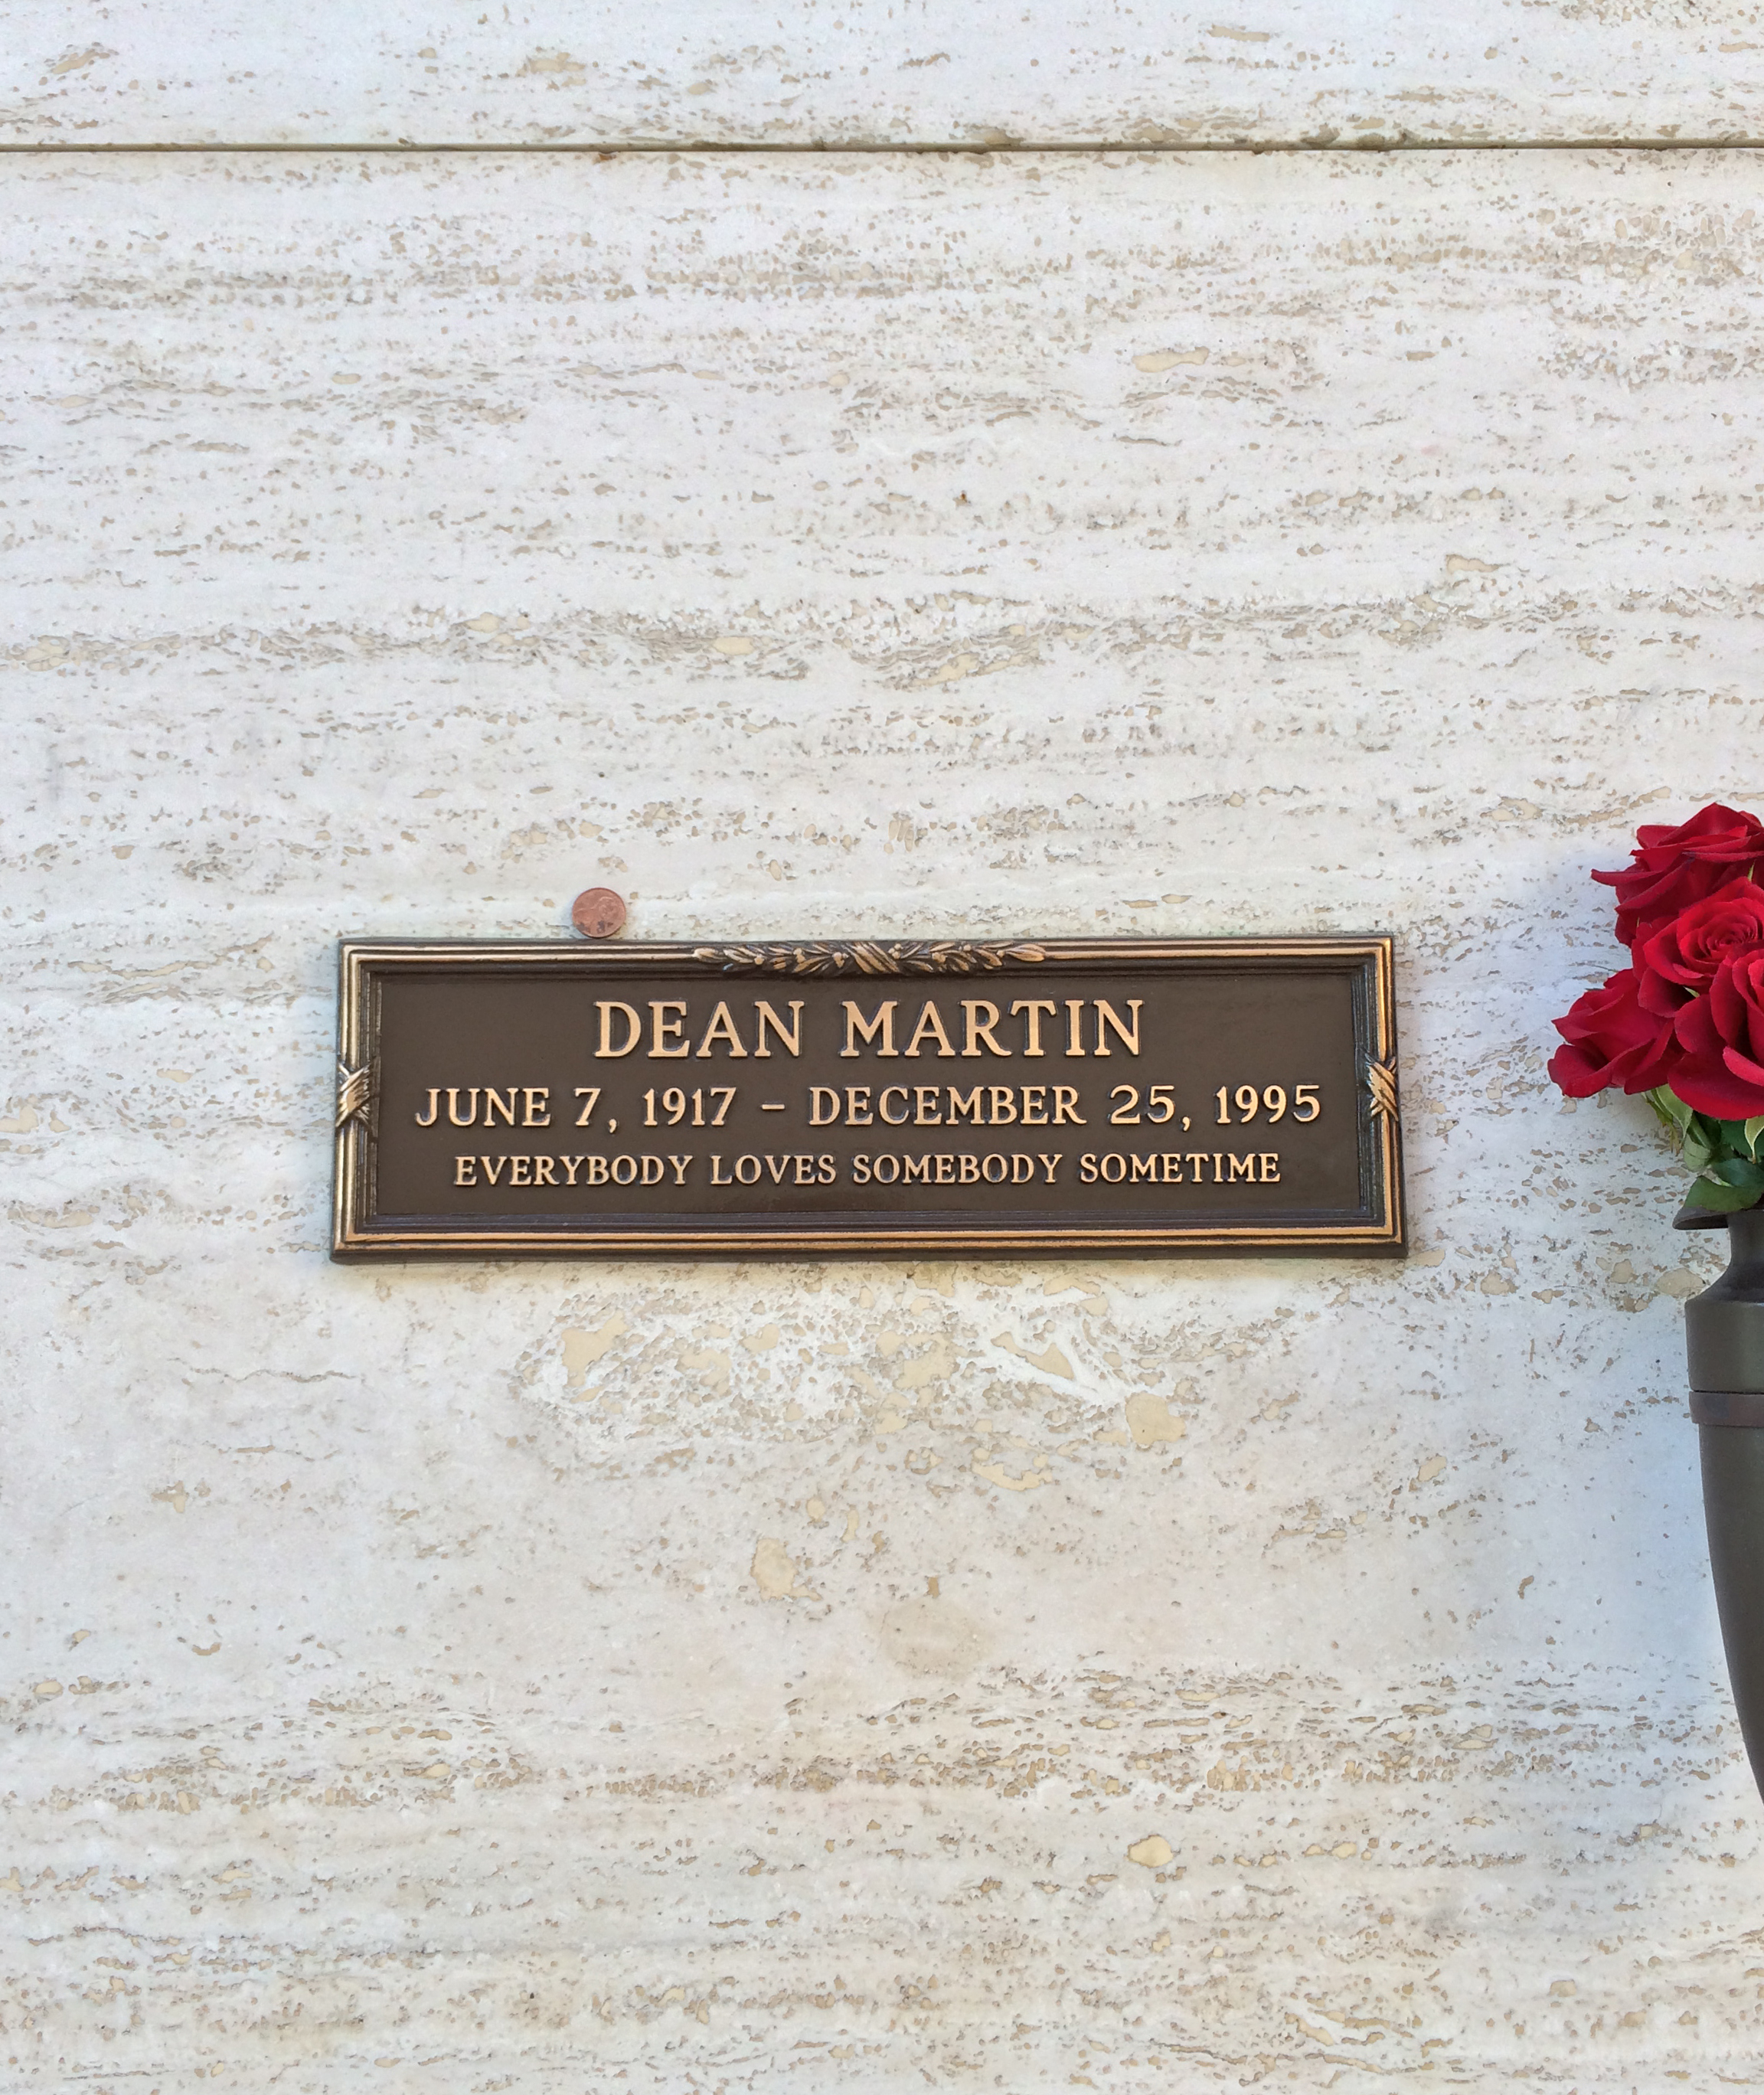 Dean Martin - Wikipedia